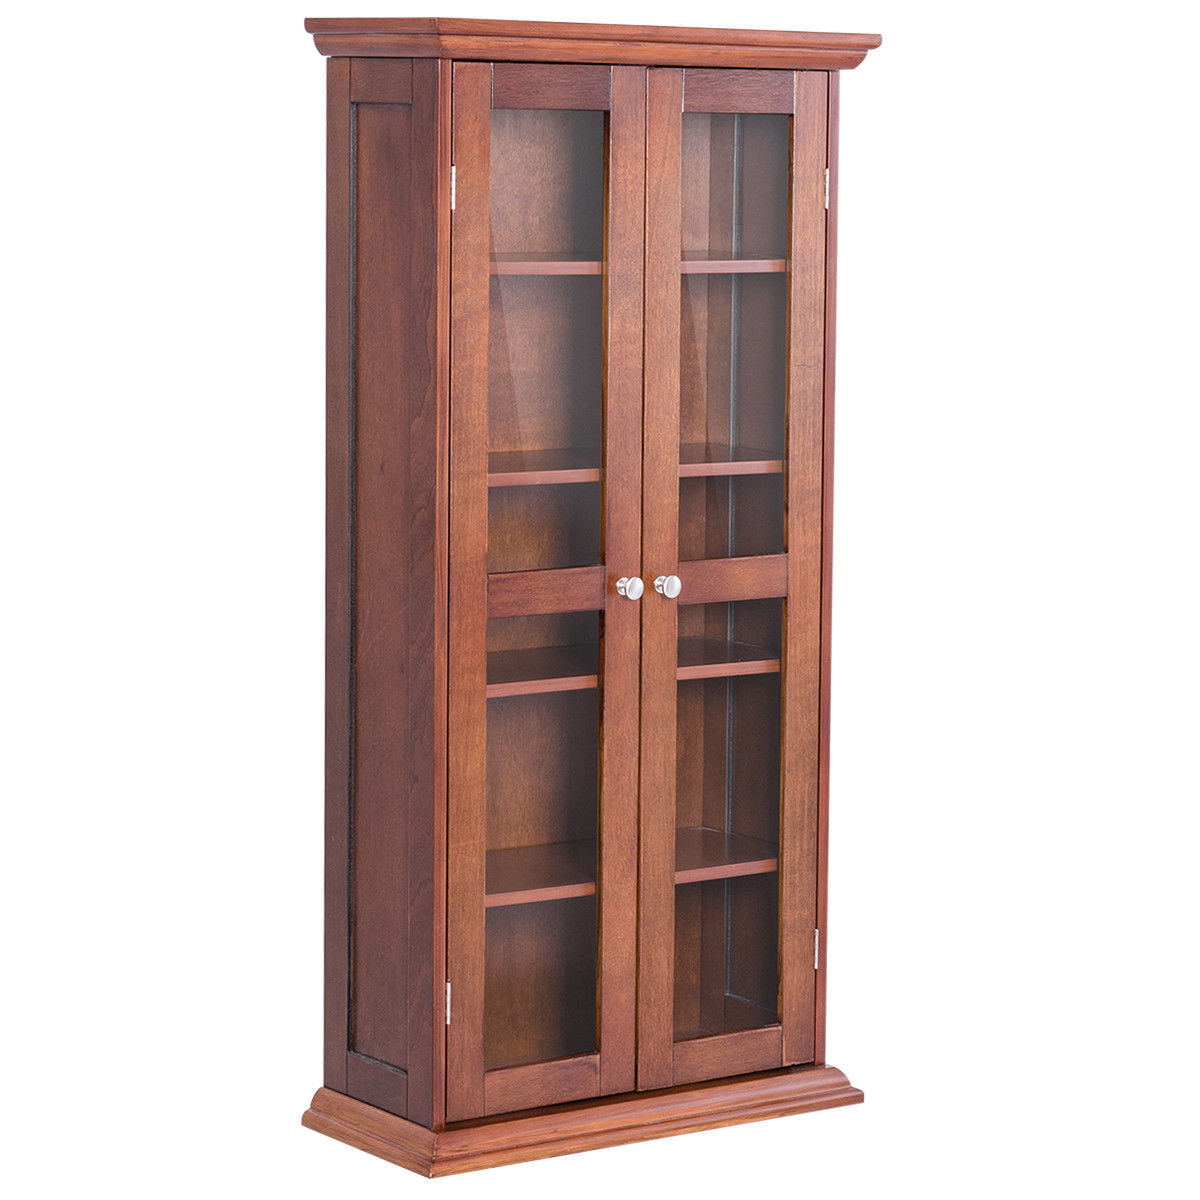 44 5 Wood Media Storage Cabinet Cd Dvd Shelves Tower Glass Doors